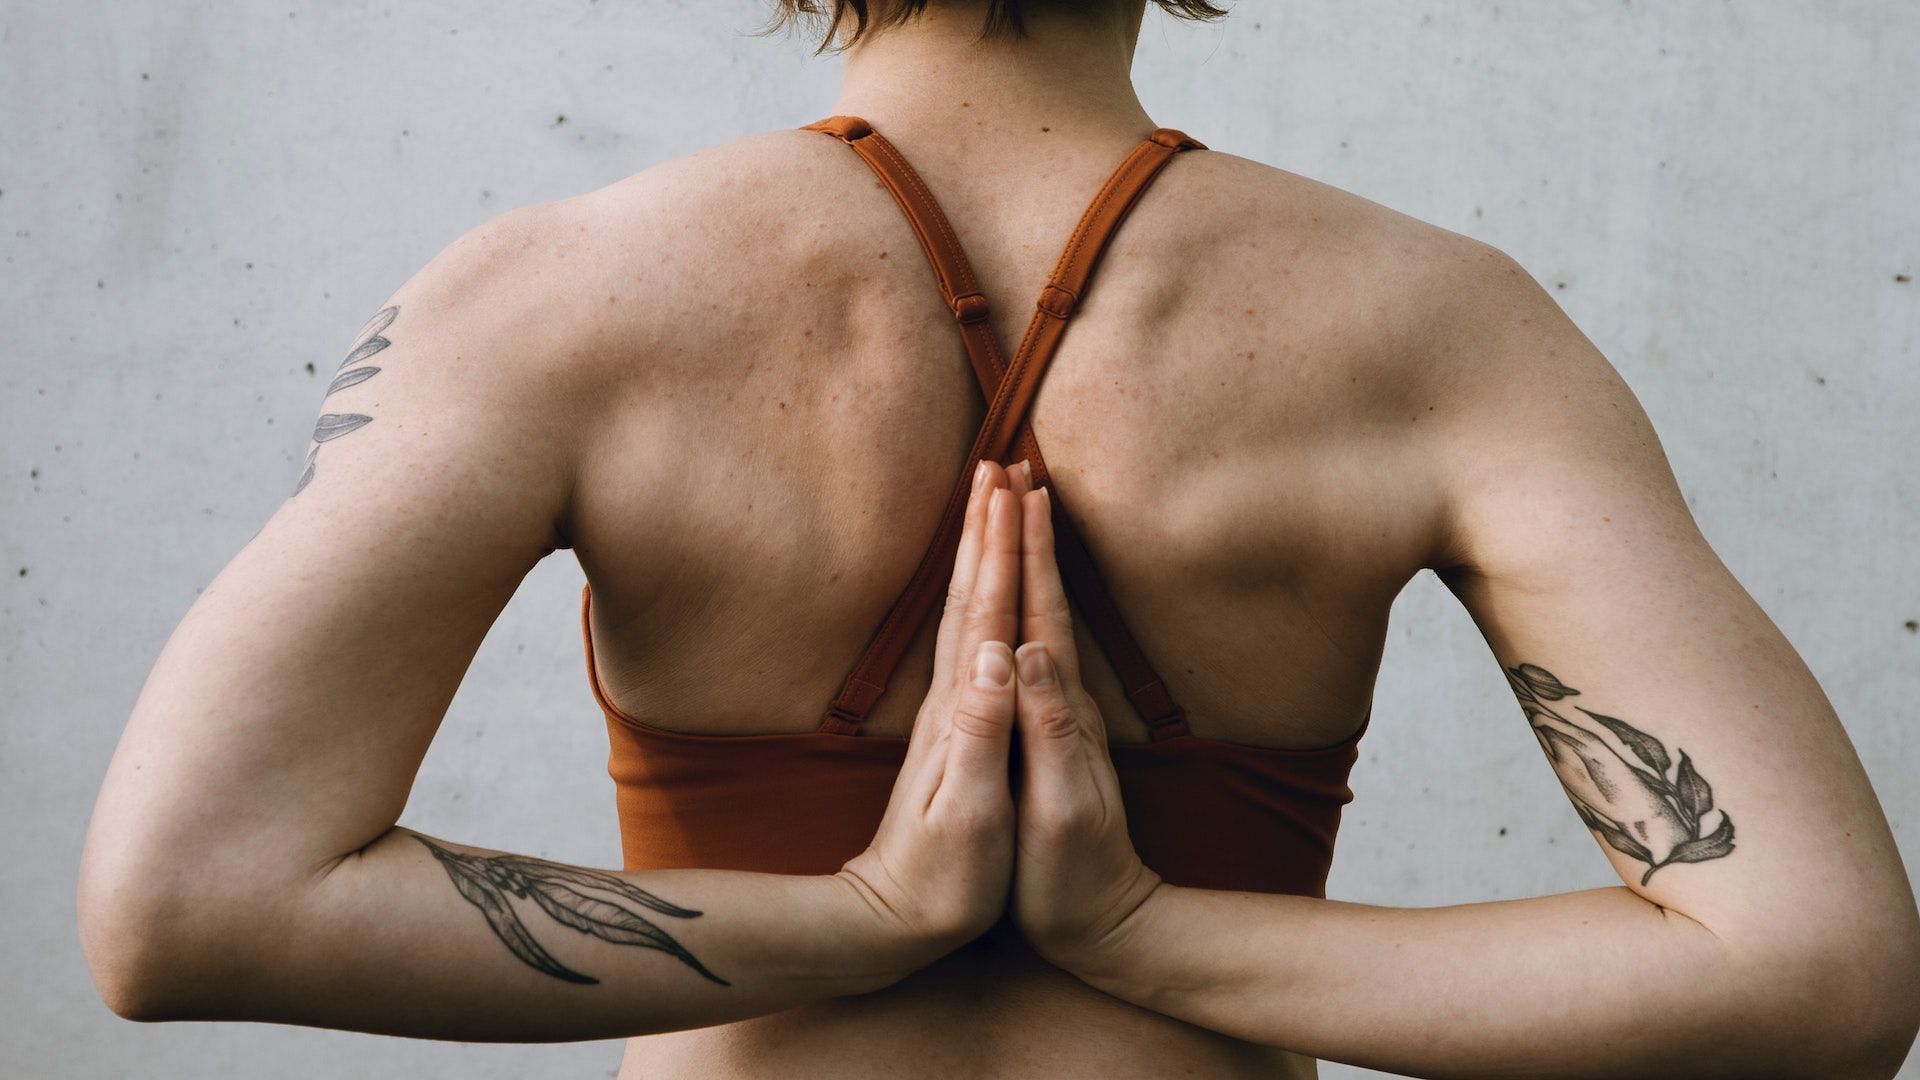 Women must focus on proper posture to overcome pain. Image via Unsplash/Jade Stephens